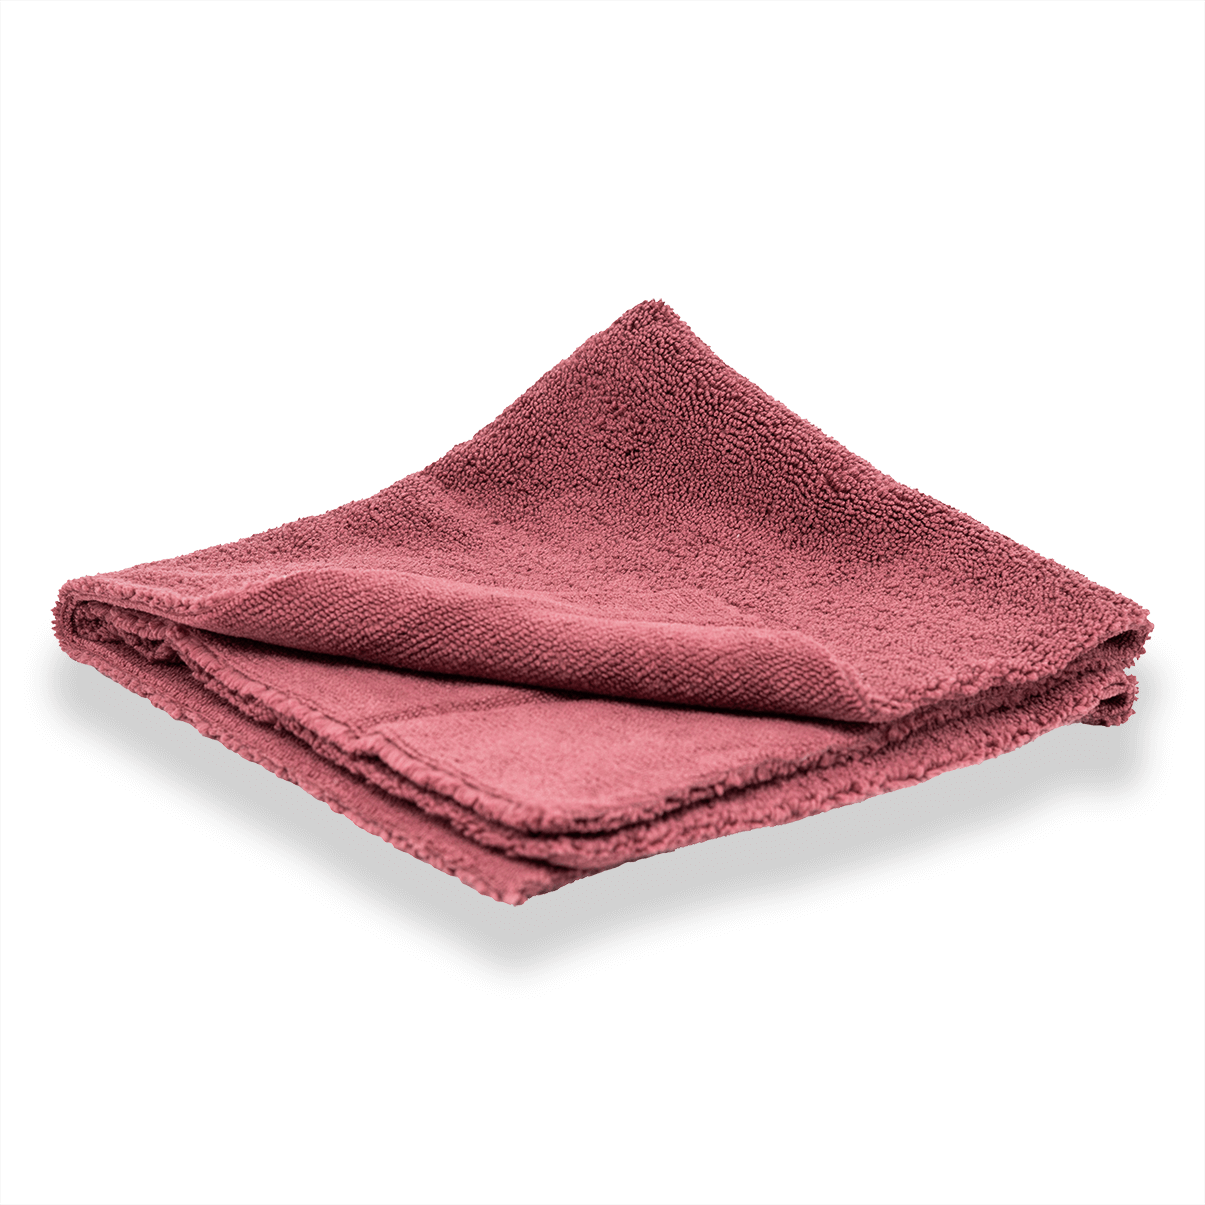 All Purpose Towel Soft 2 Side Bordeaux - Car-Care.it - Detailing e Cura dell'auto - P.IVA 11851371002 